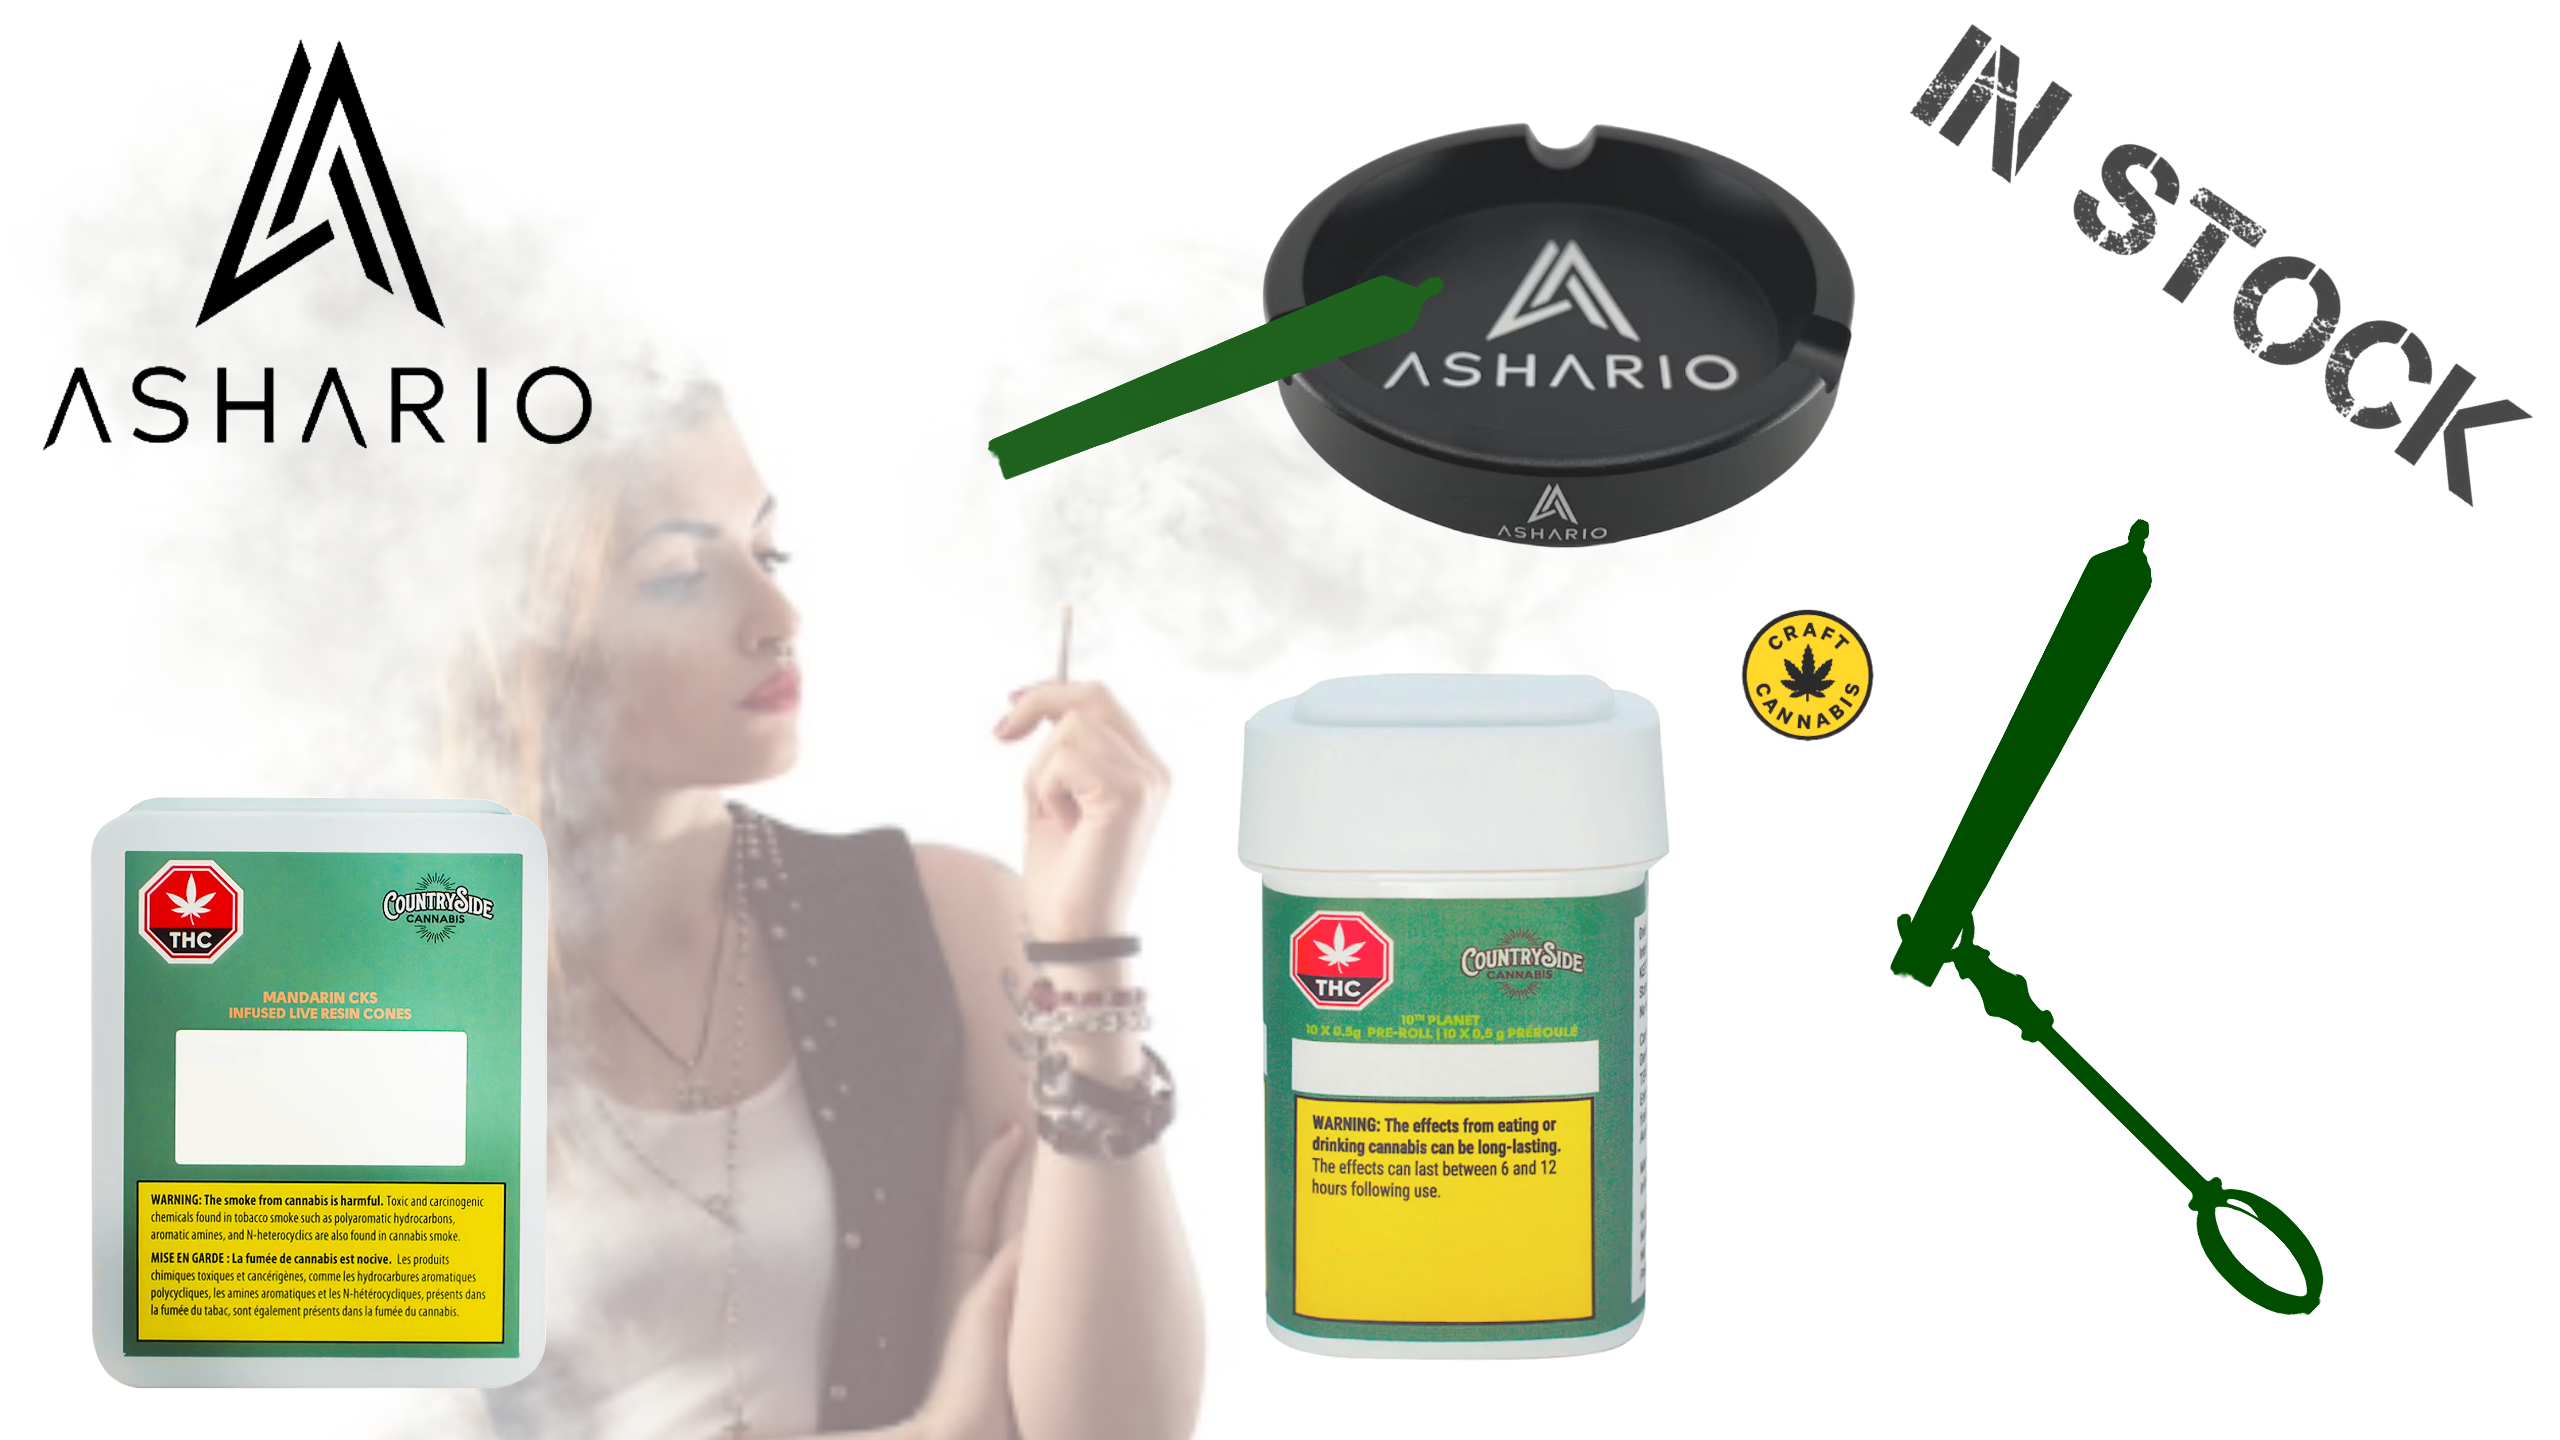 Ashario Cannabis Brand Spotlight: Discover the Luxury of Countryside Cannabis